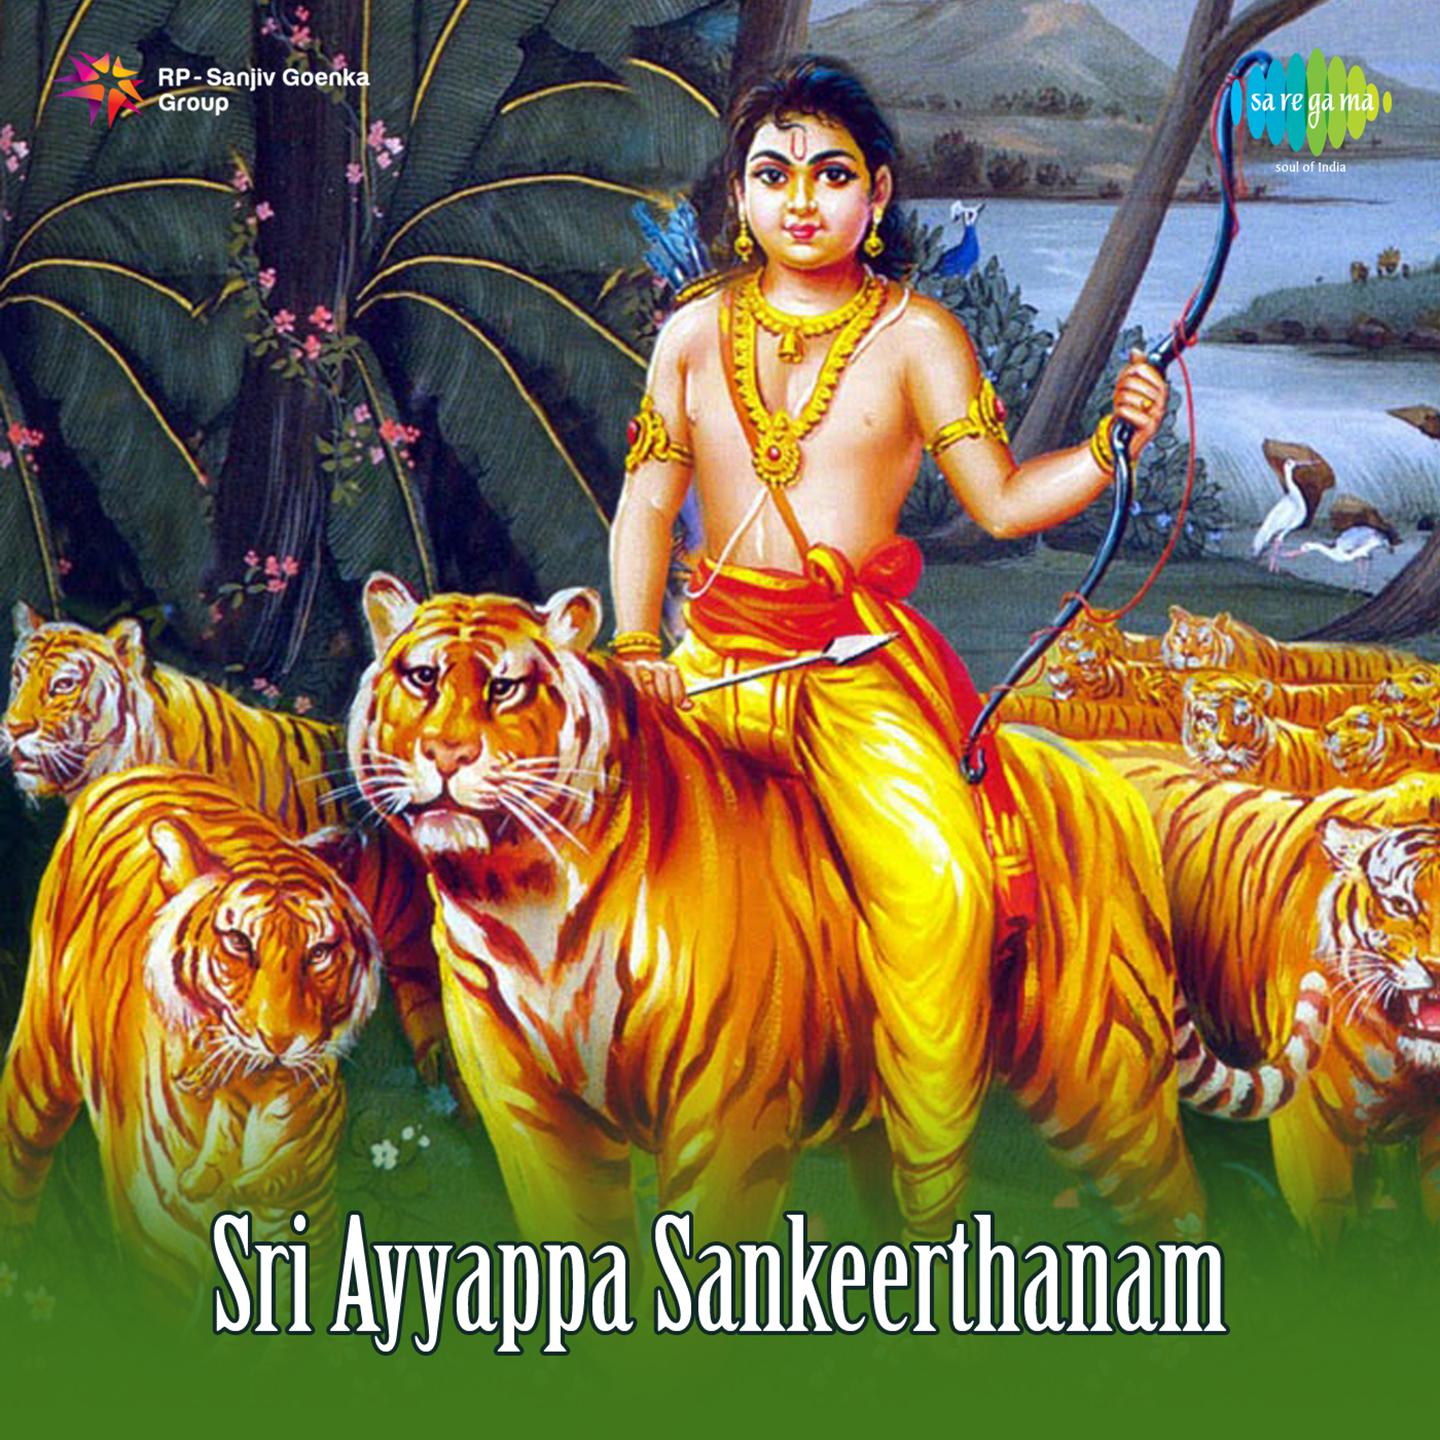 Sabarigiri Sikharana - S.P.Balasubramaniam